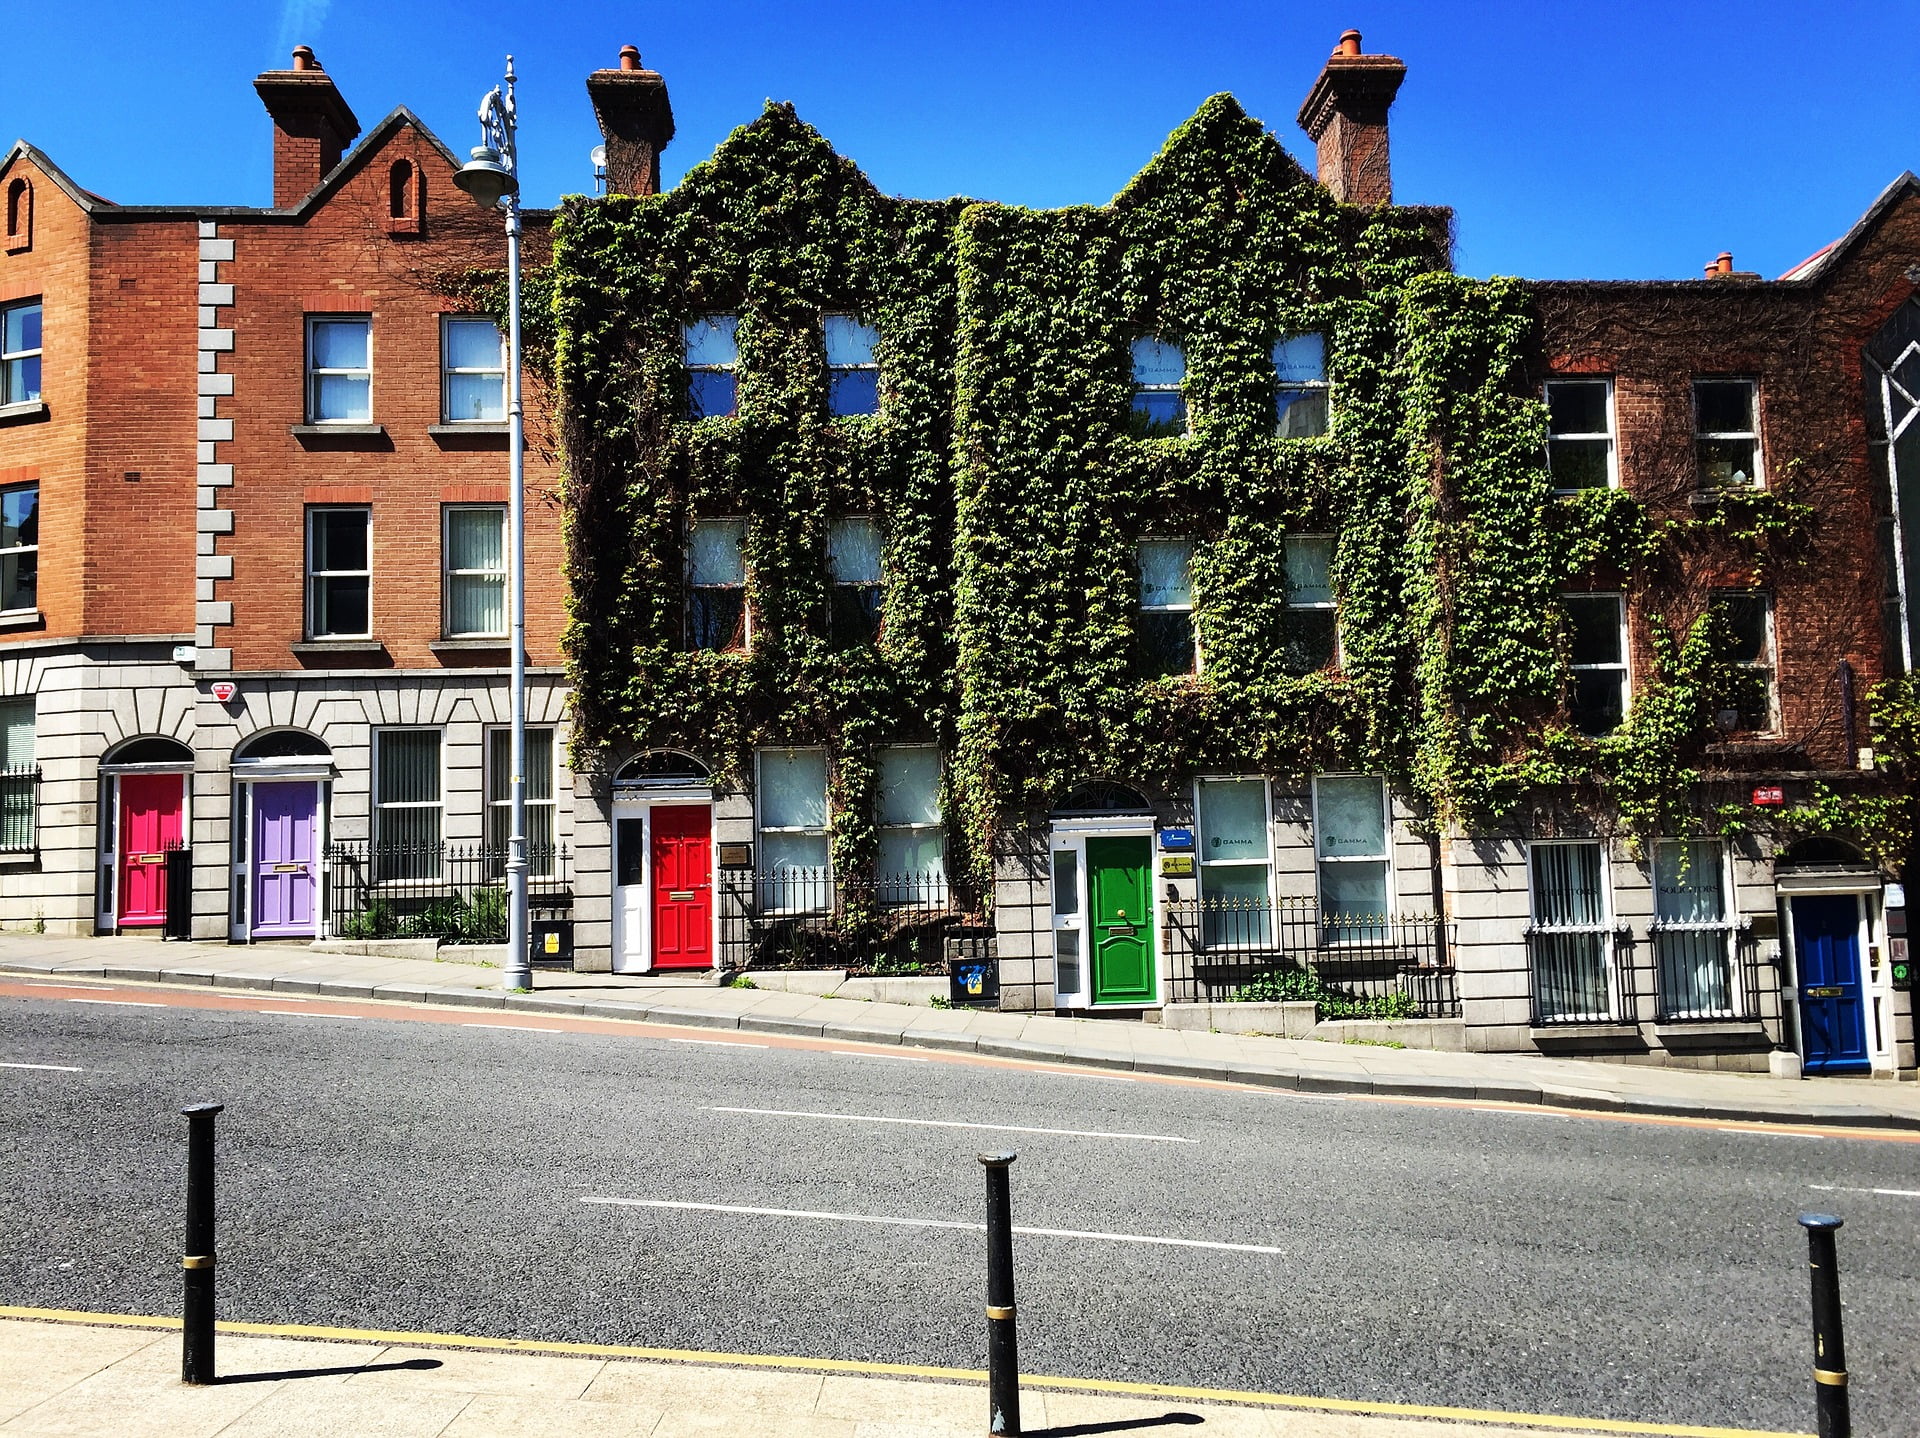 Dublin buildings